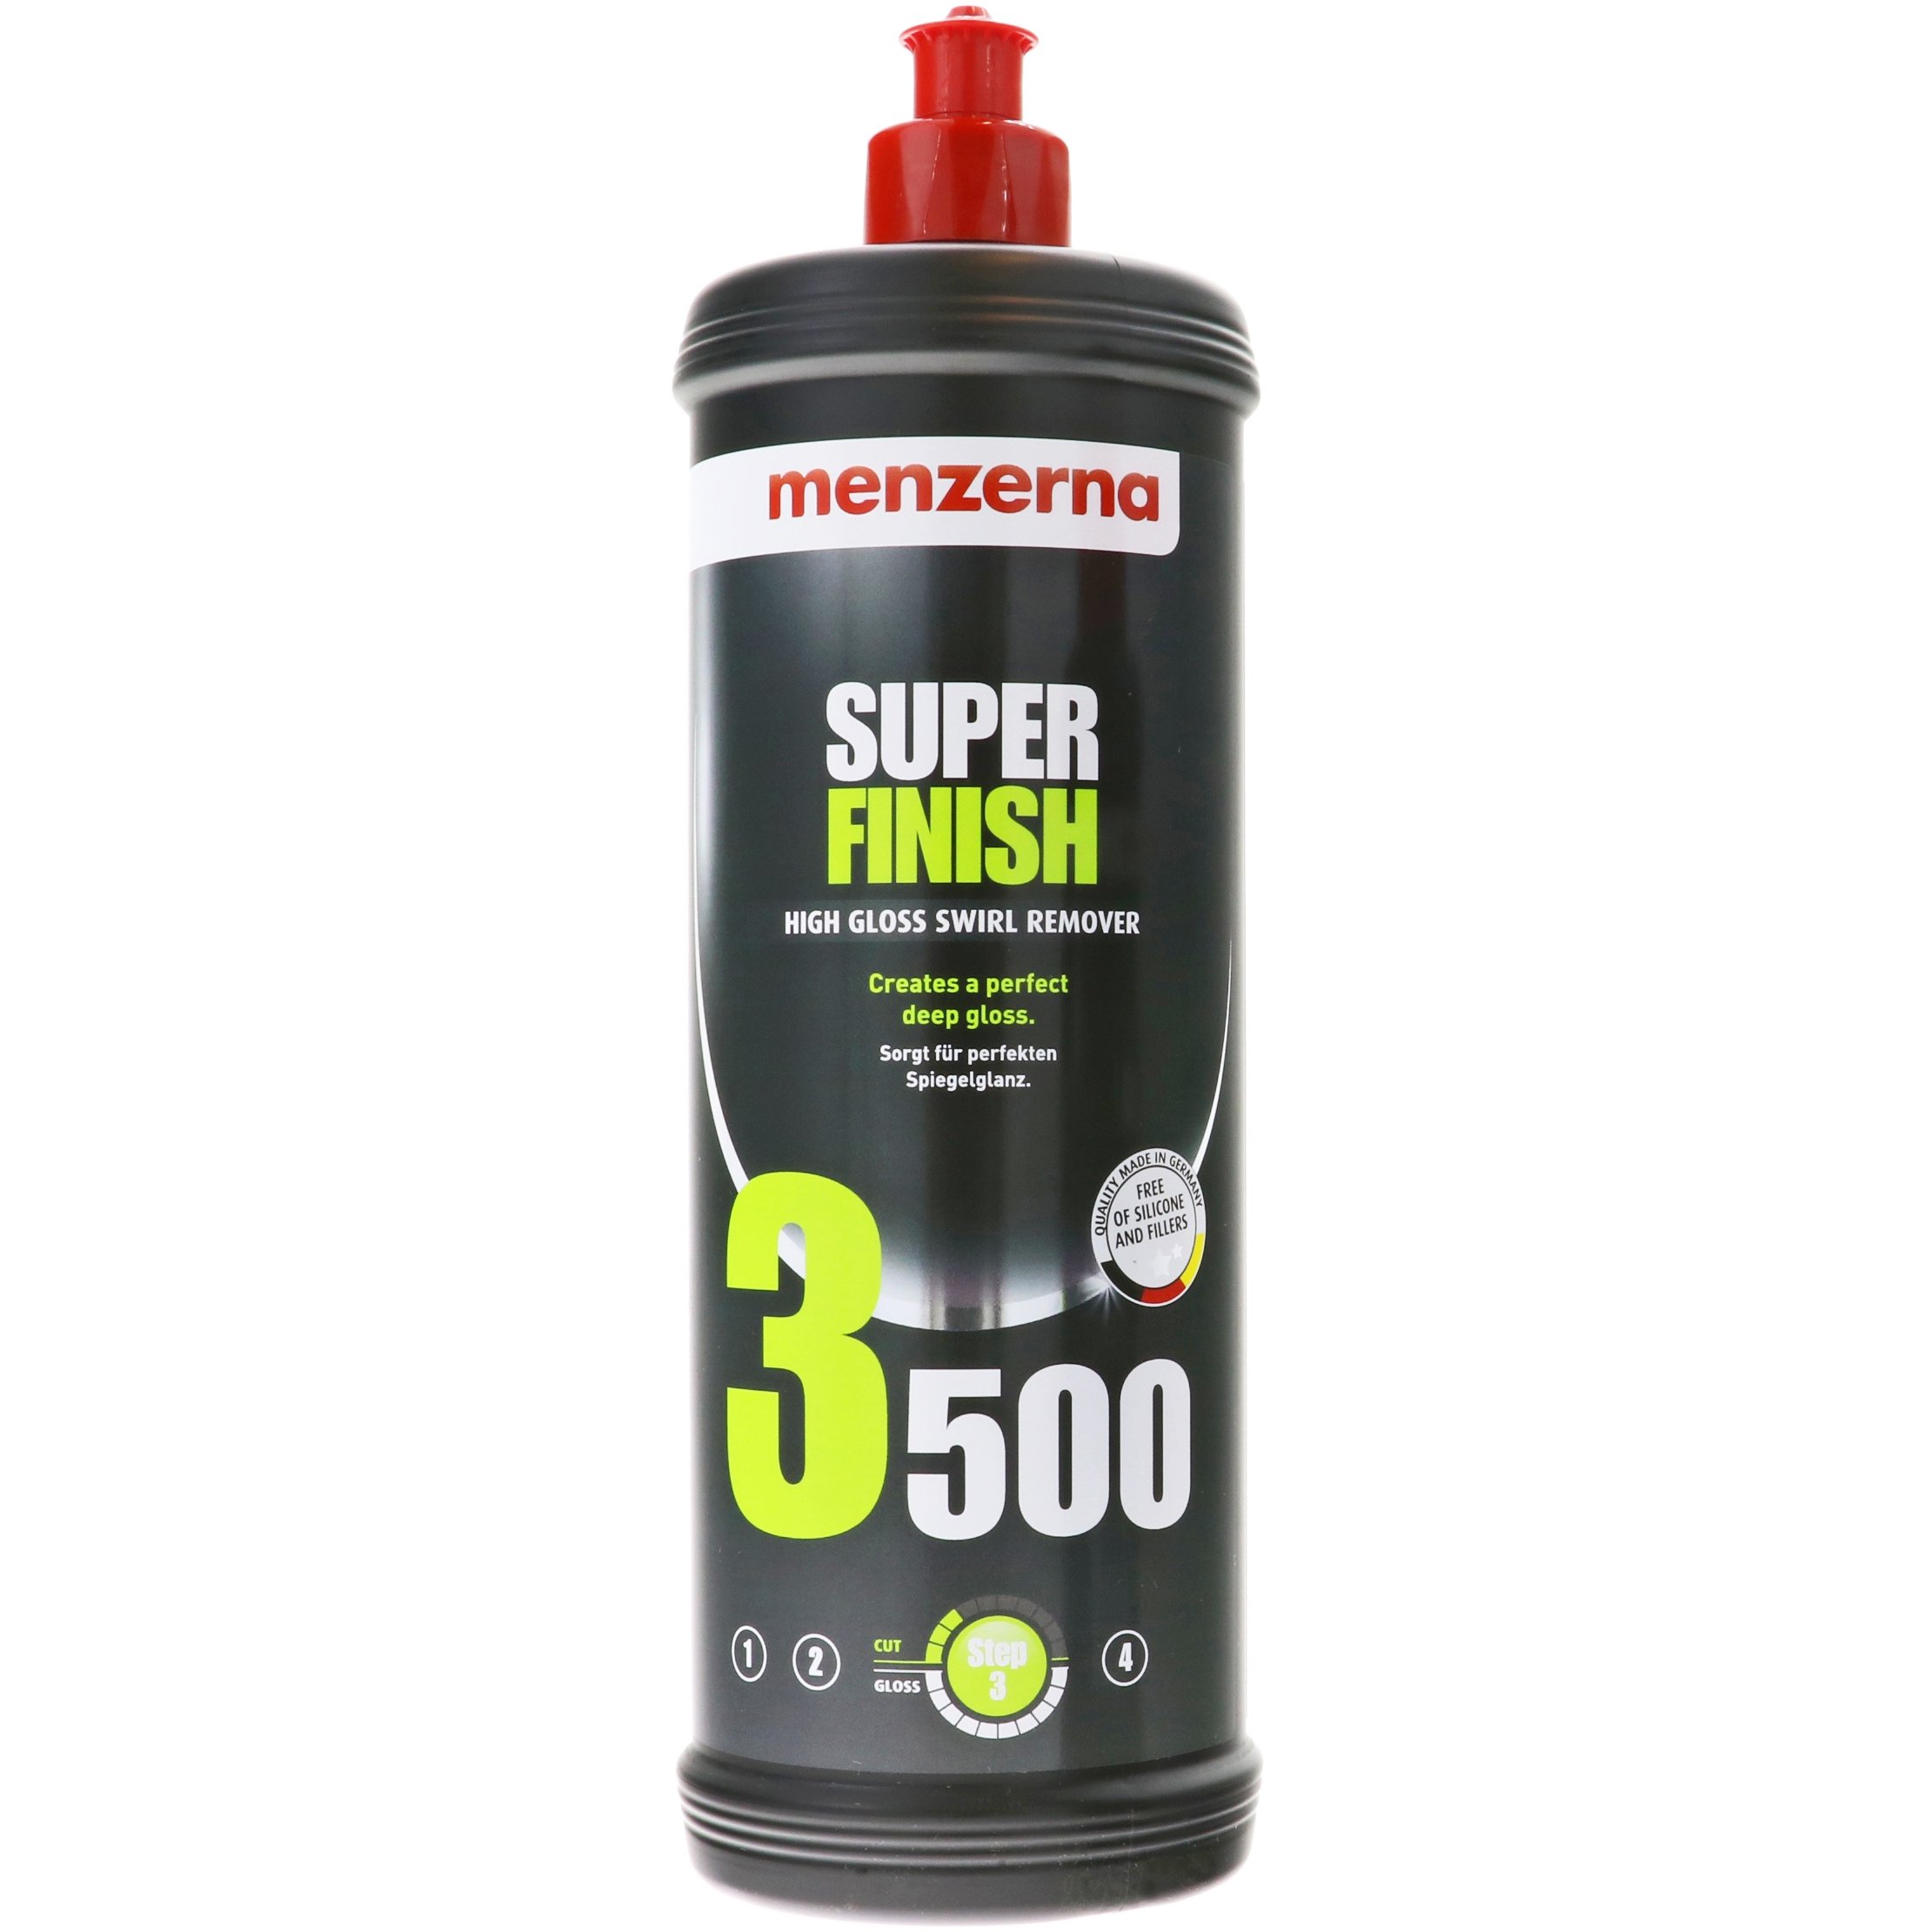 Super Finish 3500 - 1000ml